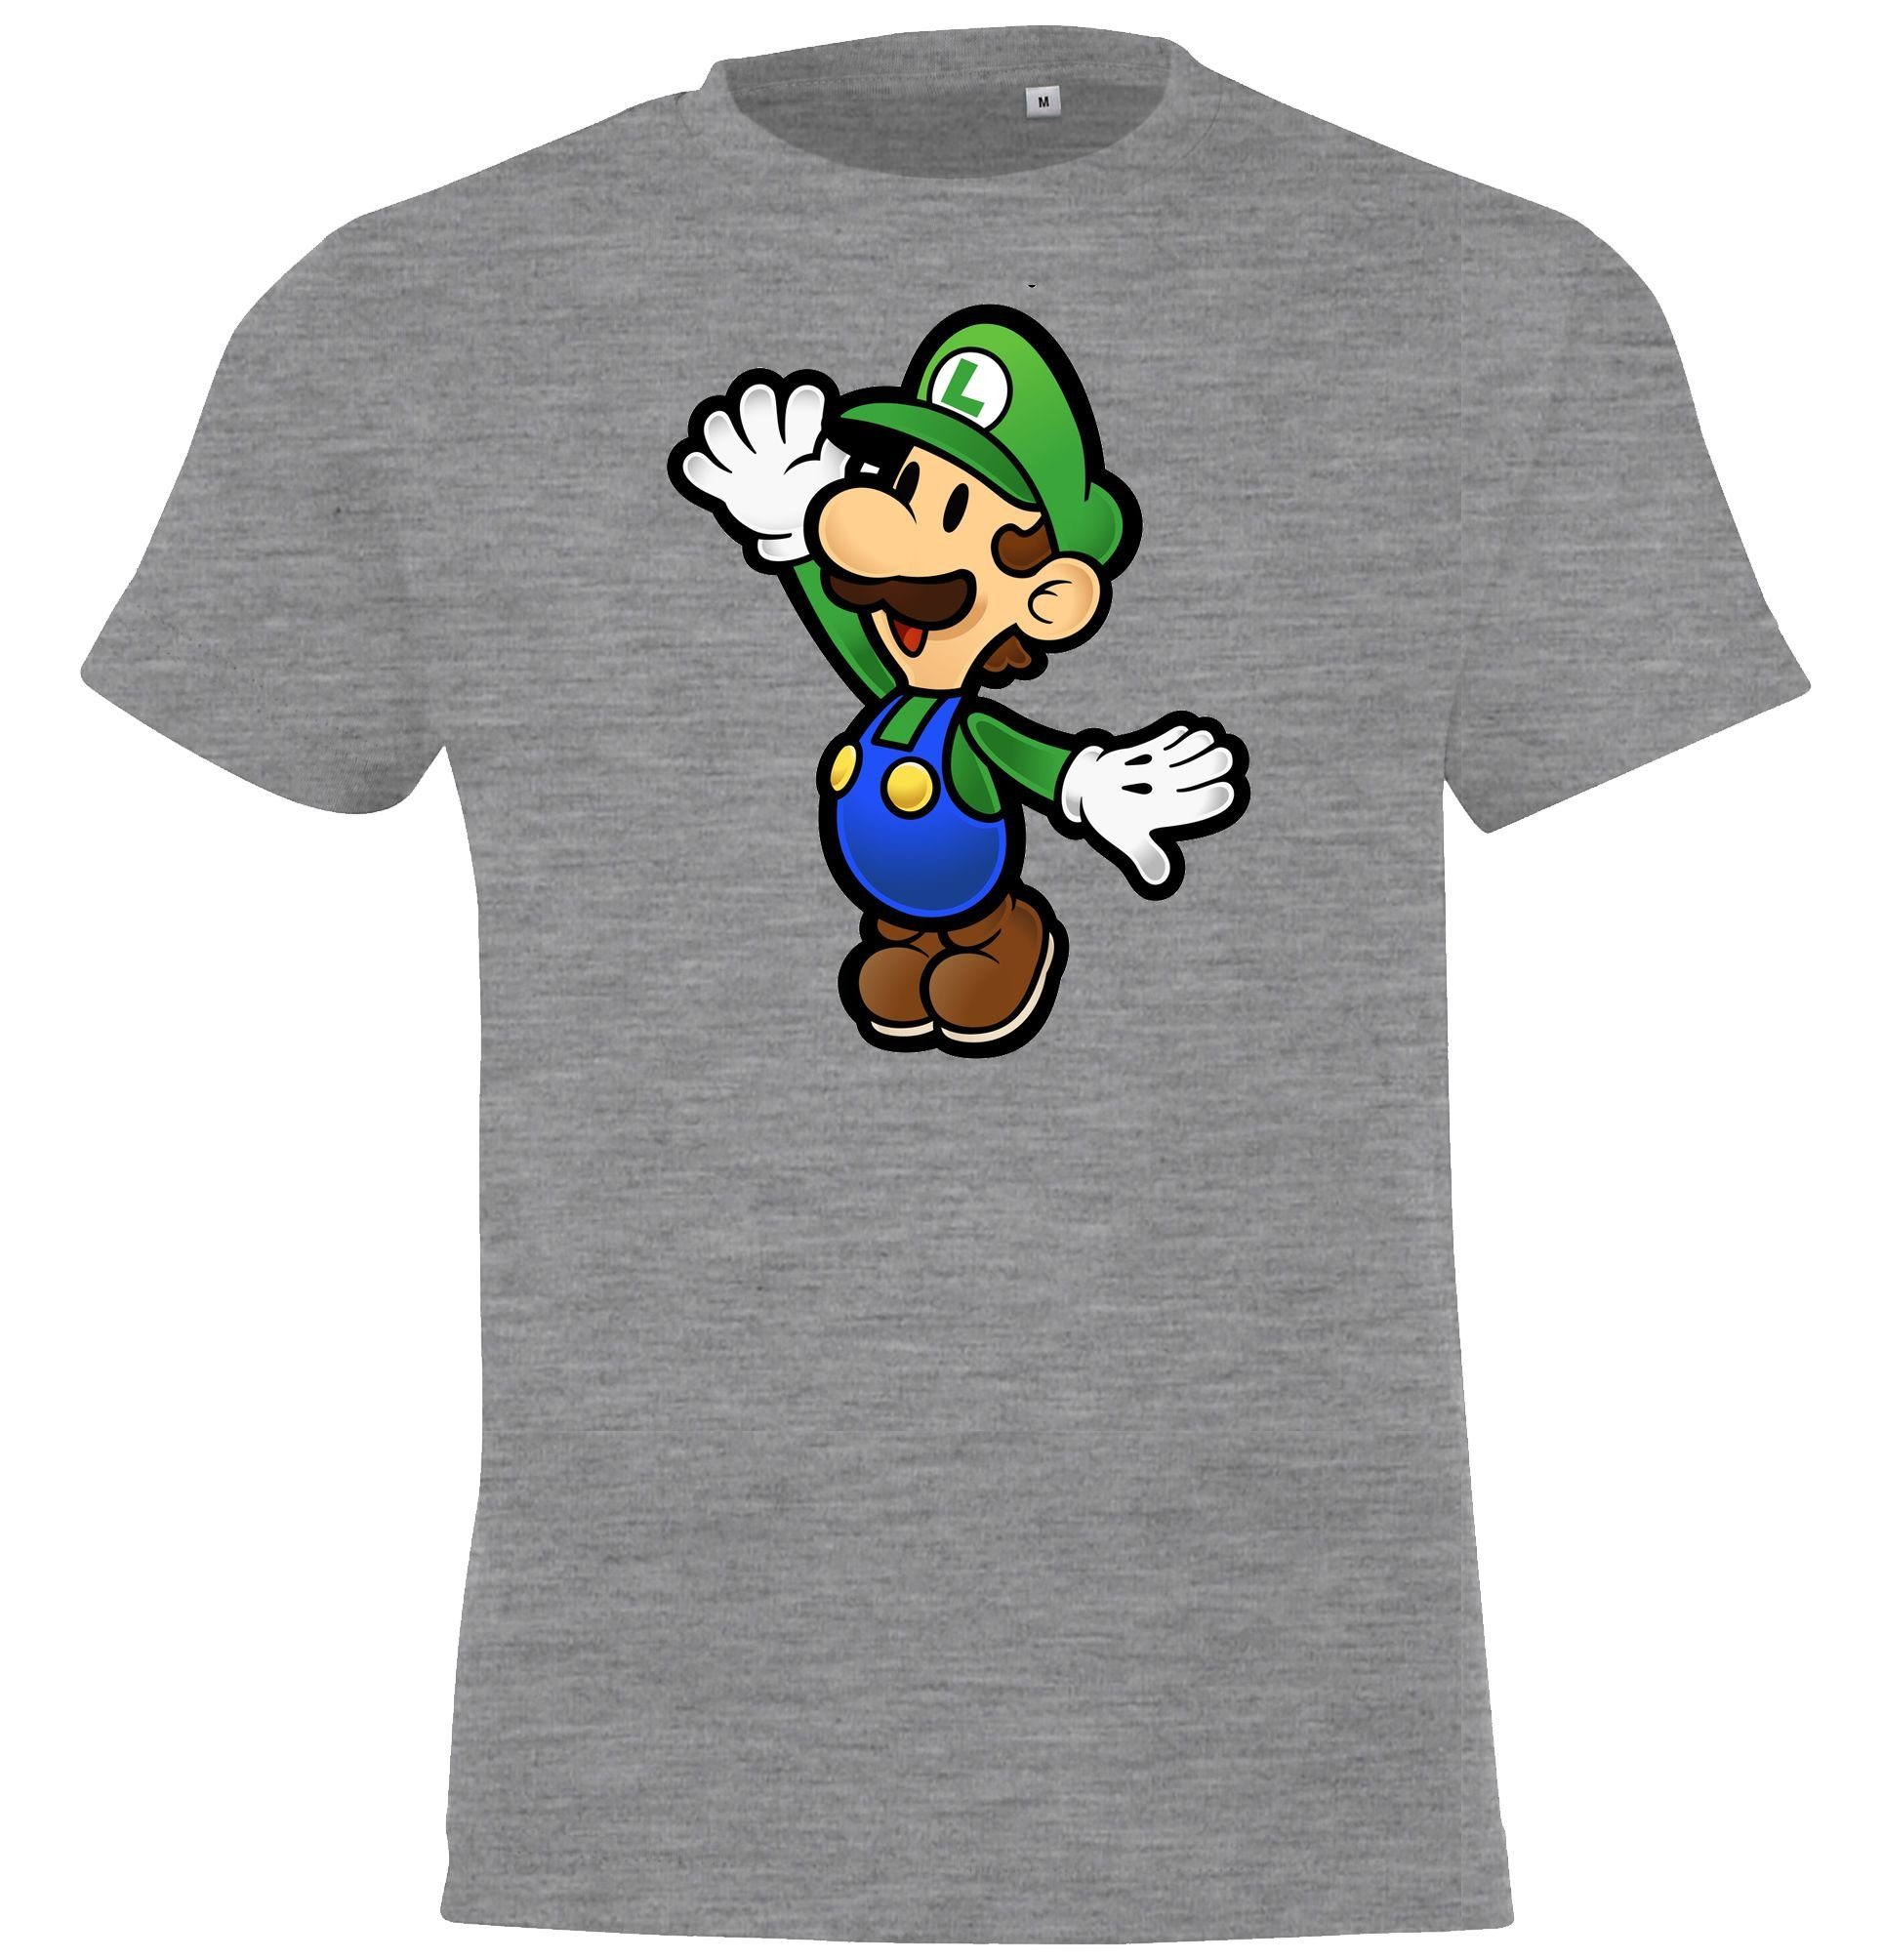 Youth Mit Grau T-Shirt T-Shirt Front Modell Print trendigem Kinder Luigi Designz